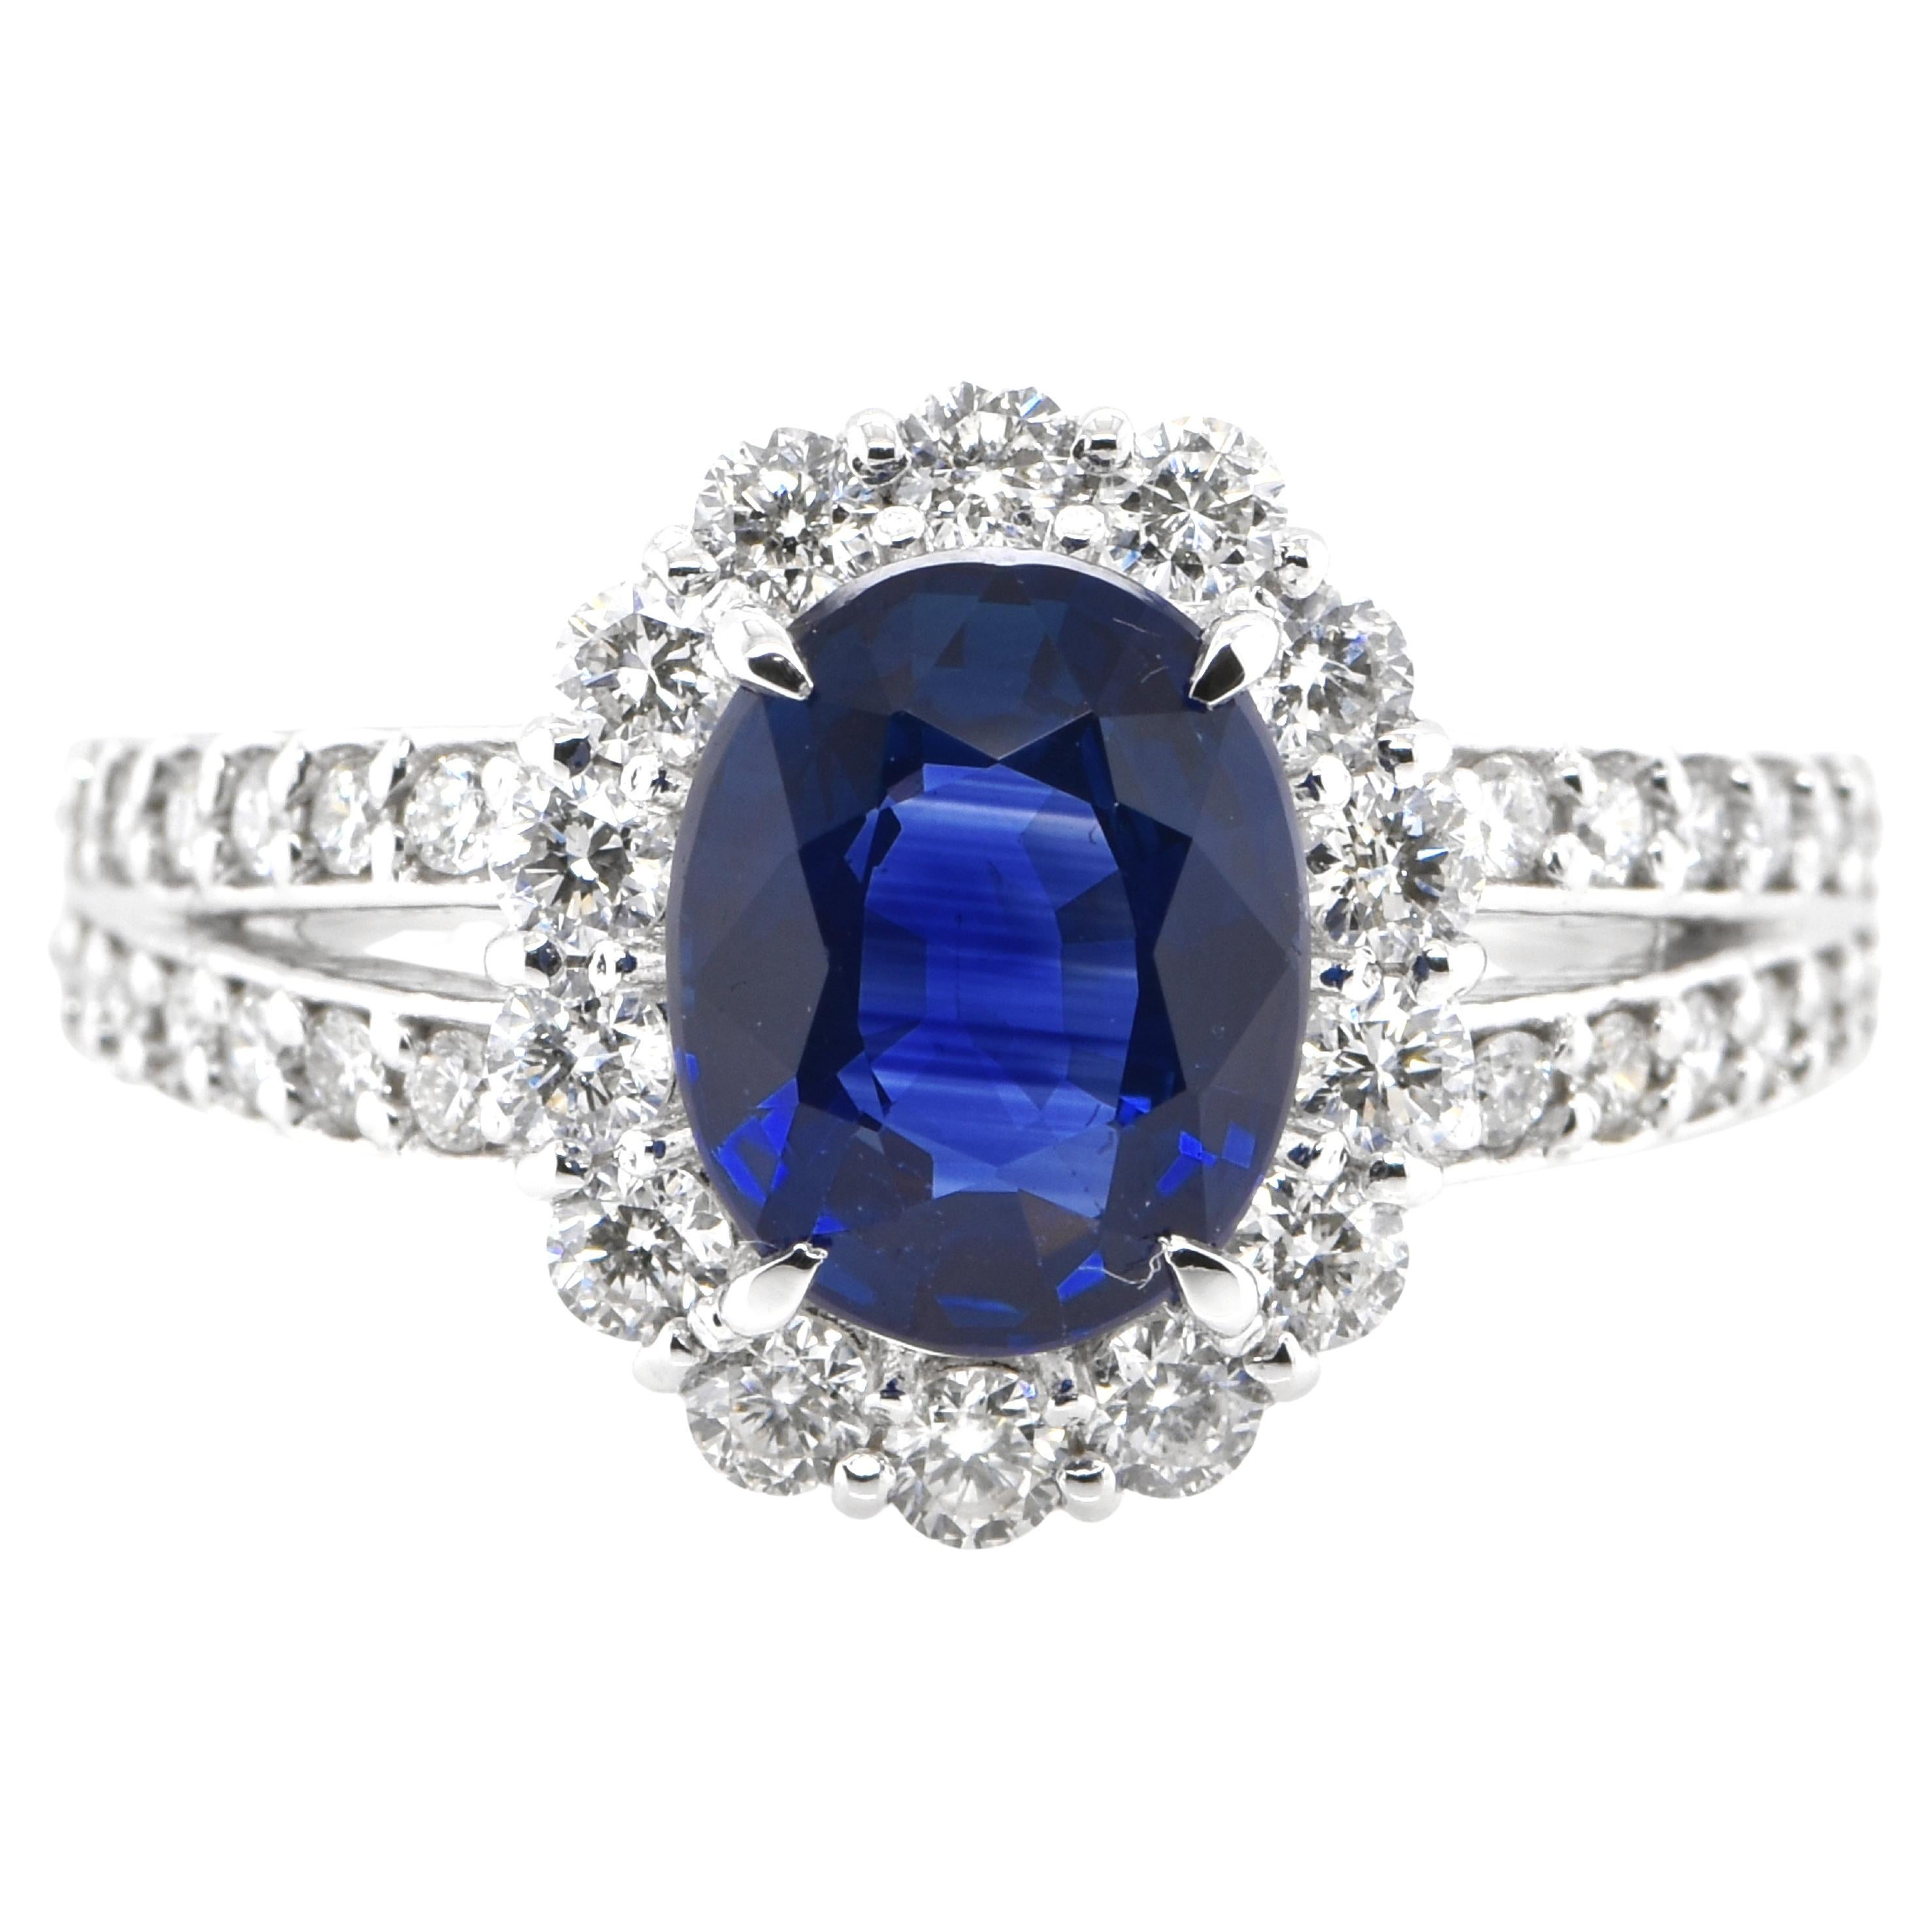 GIA Certified 2.02 Carat Natural Ceylon Sapphire & Diamond Ring Set in Platinum